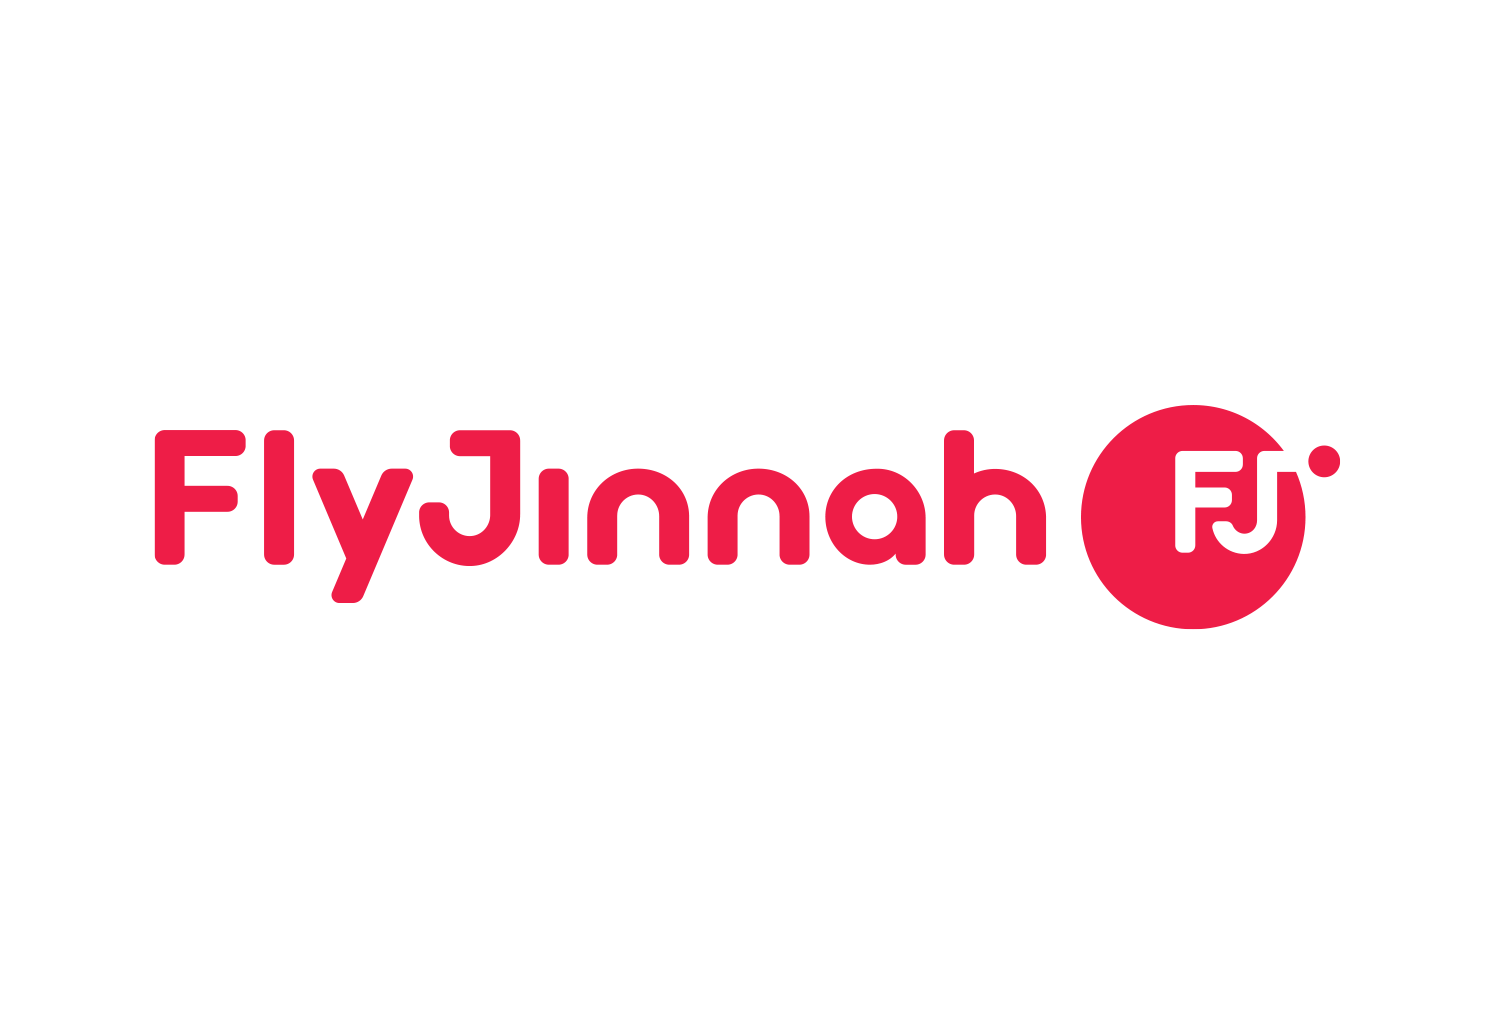 Fly Jinnah